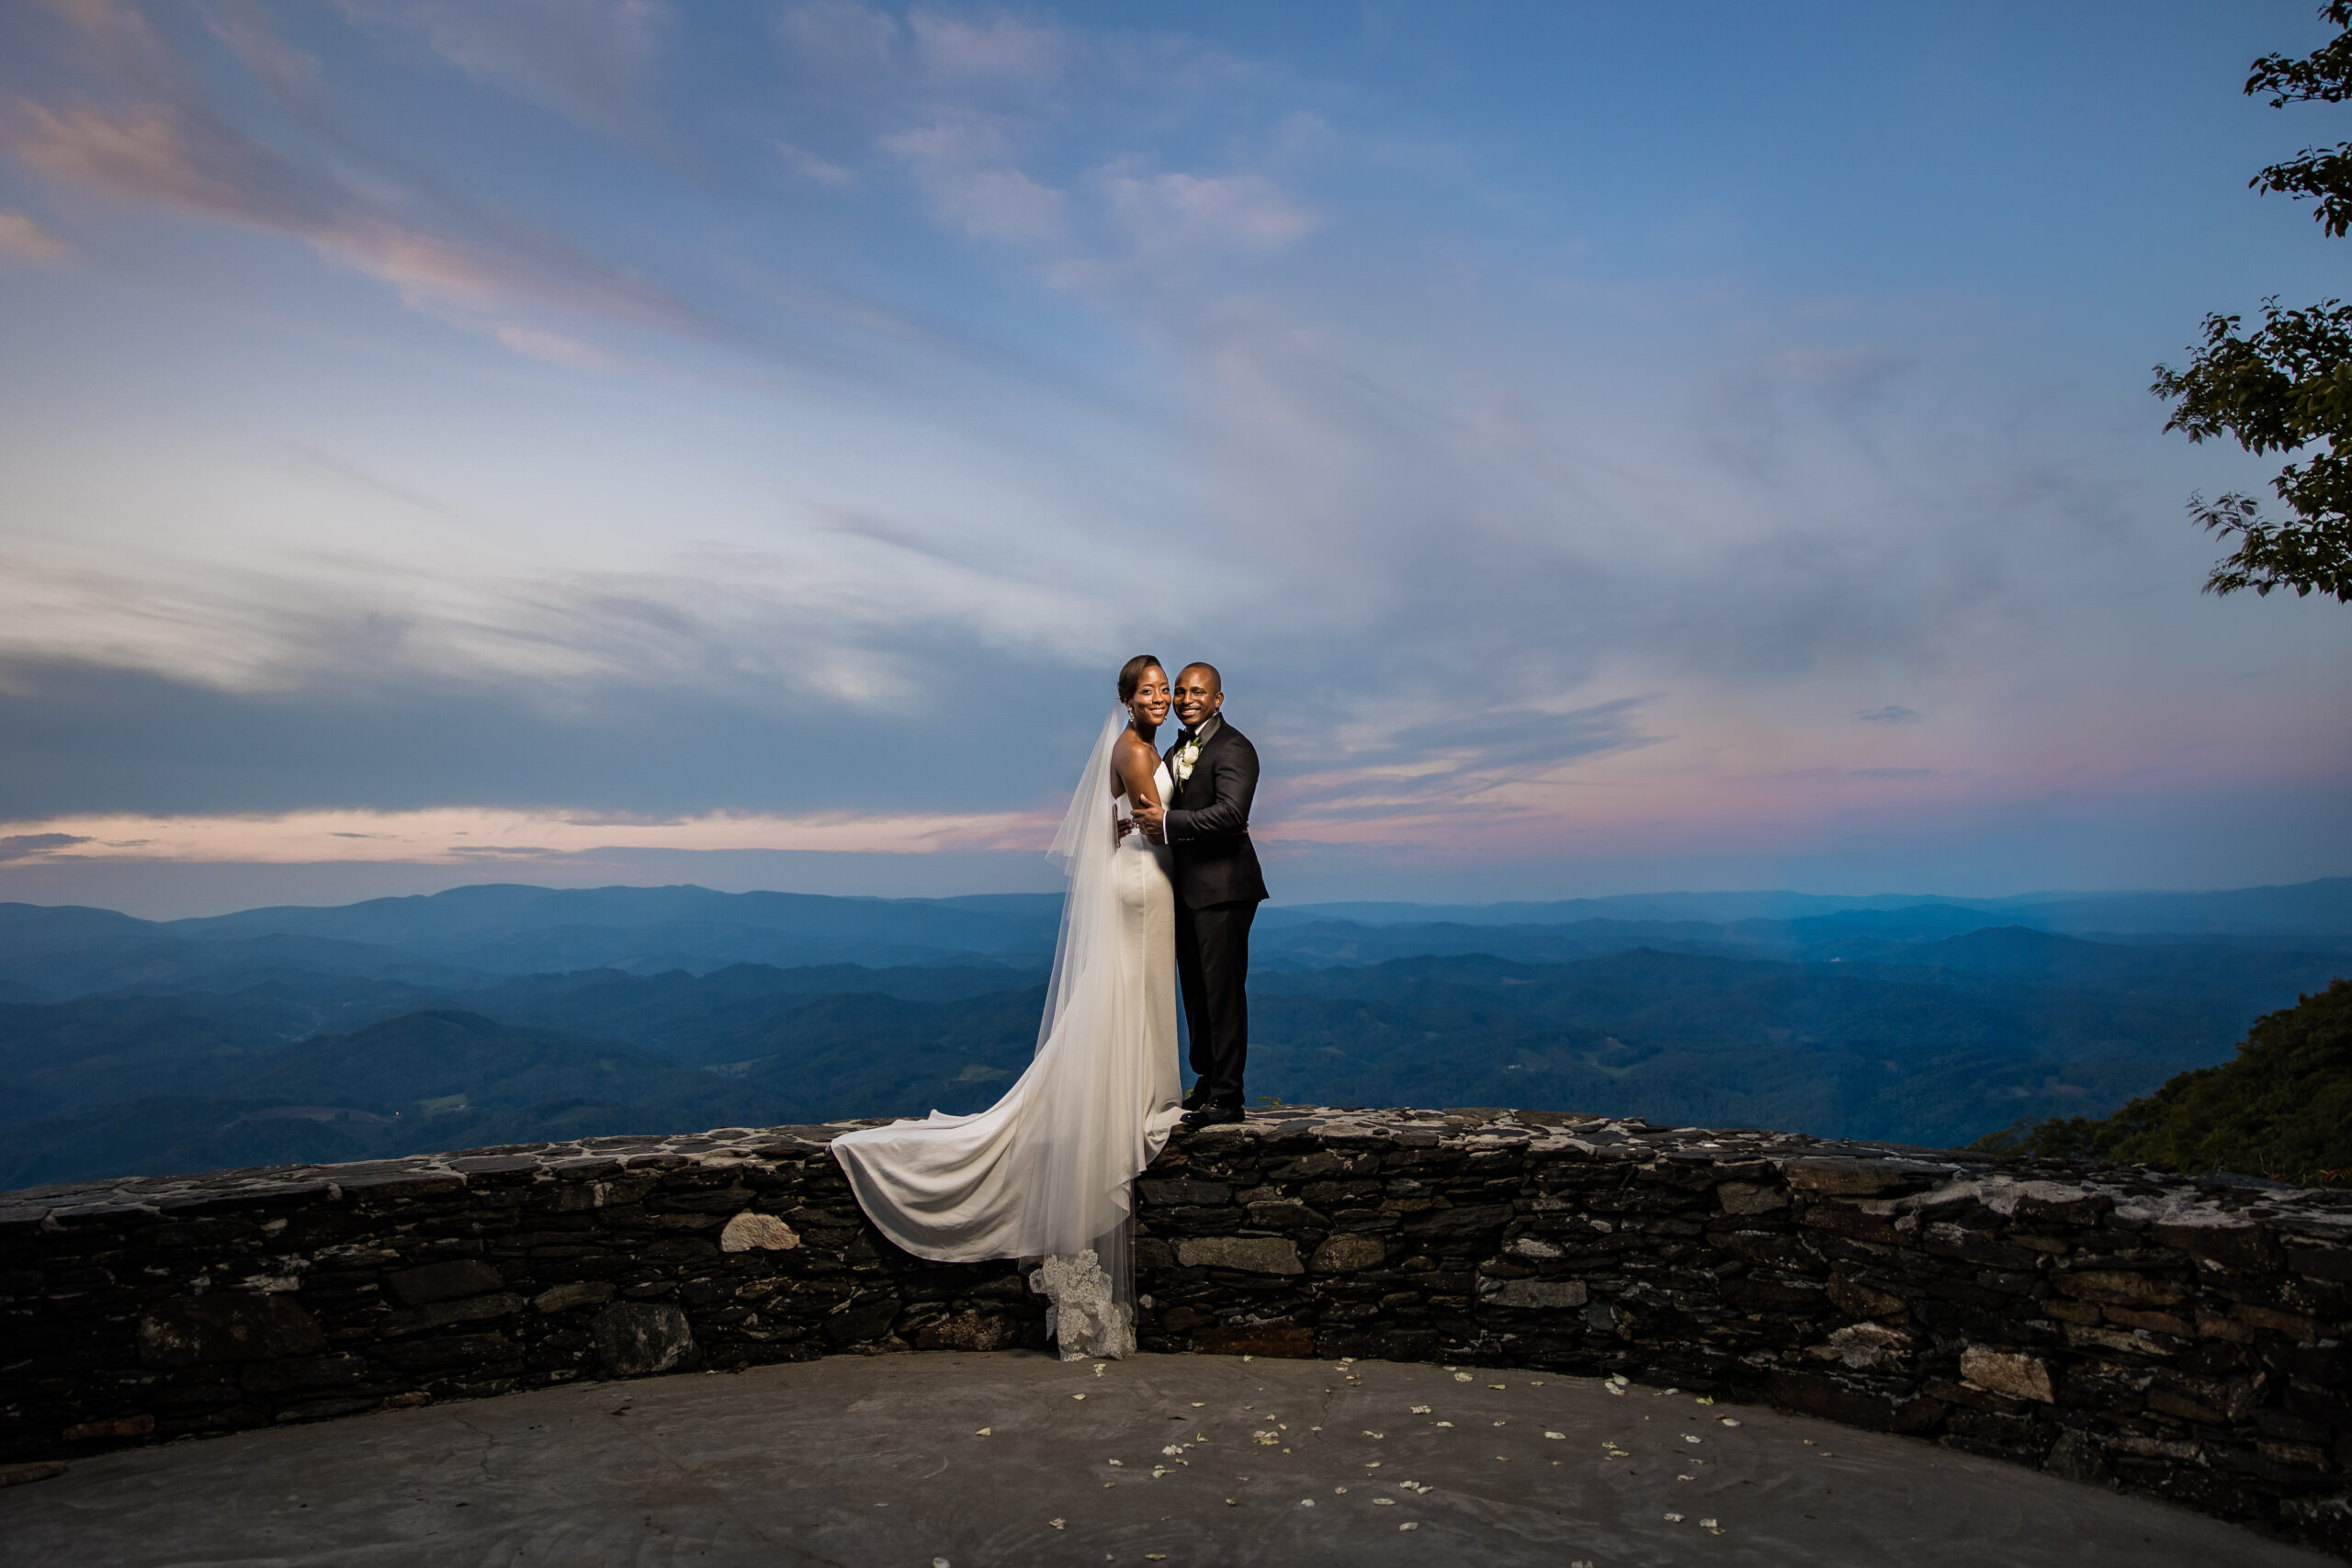 British Architecture Inspired Blue Ridge Mountain Wedding | Mountainside Bride